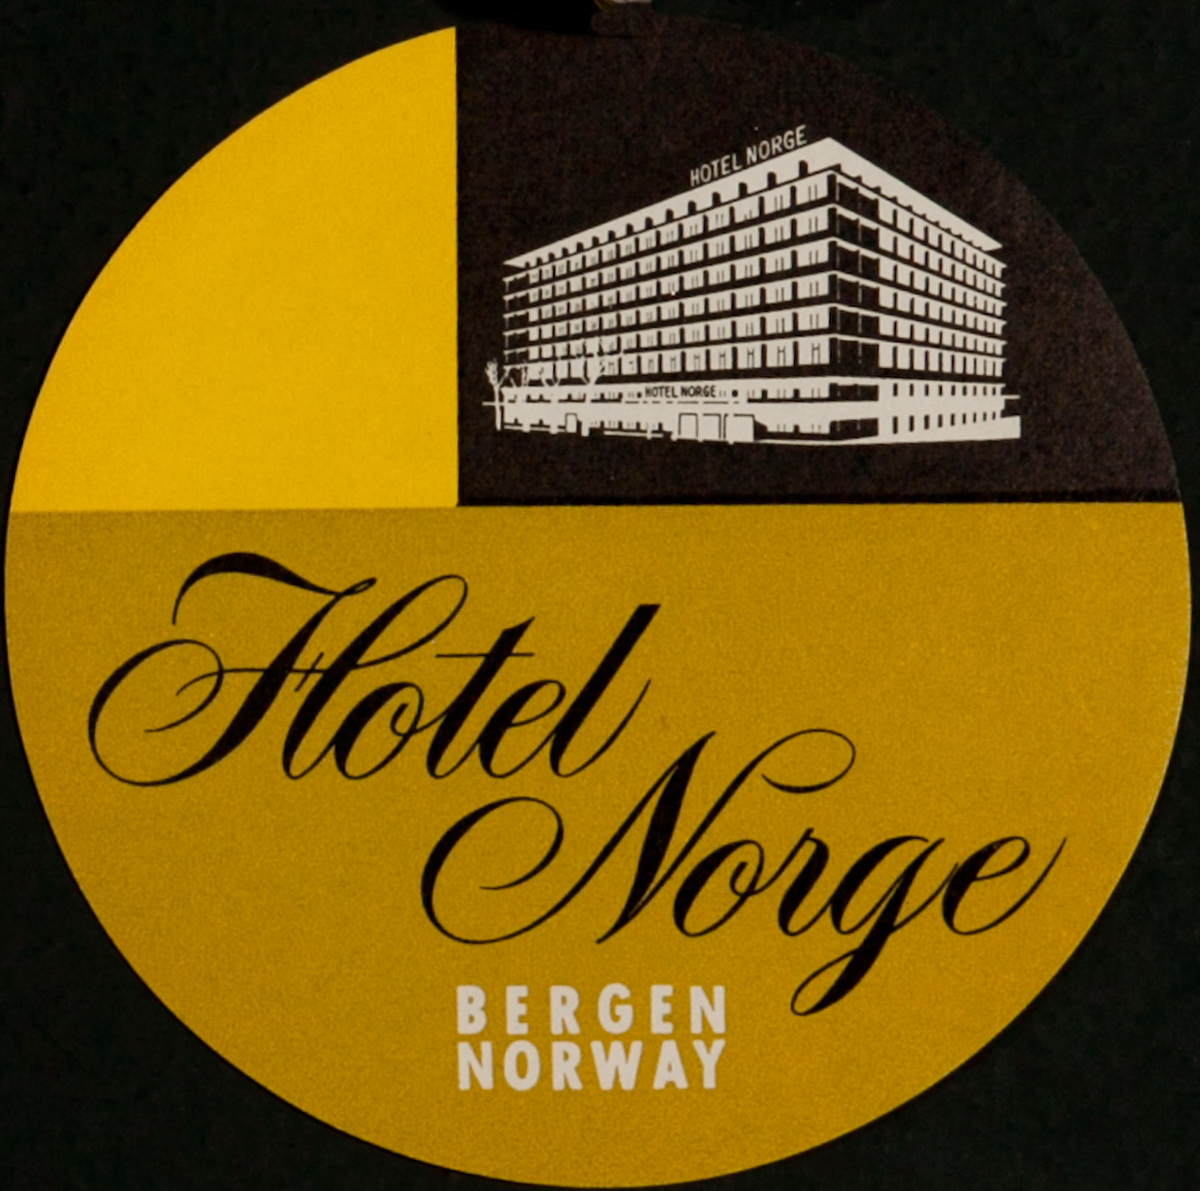 Hotel Norge Bergen Norway, Original Luggage Label